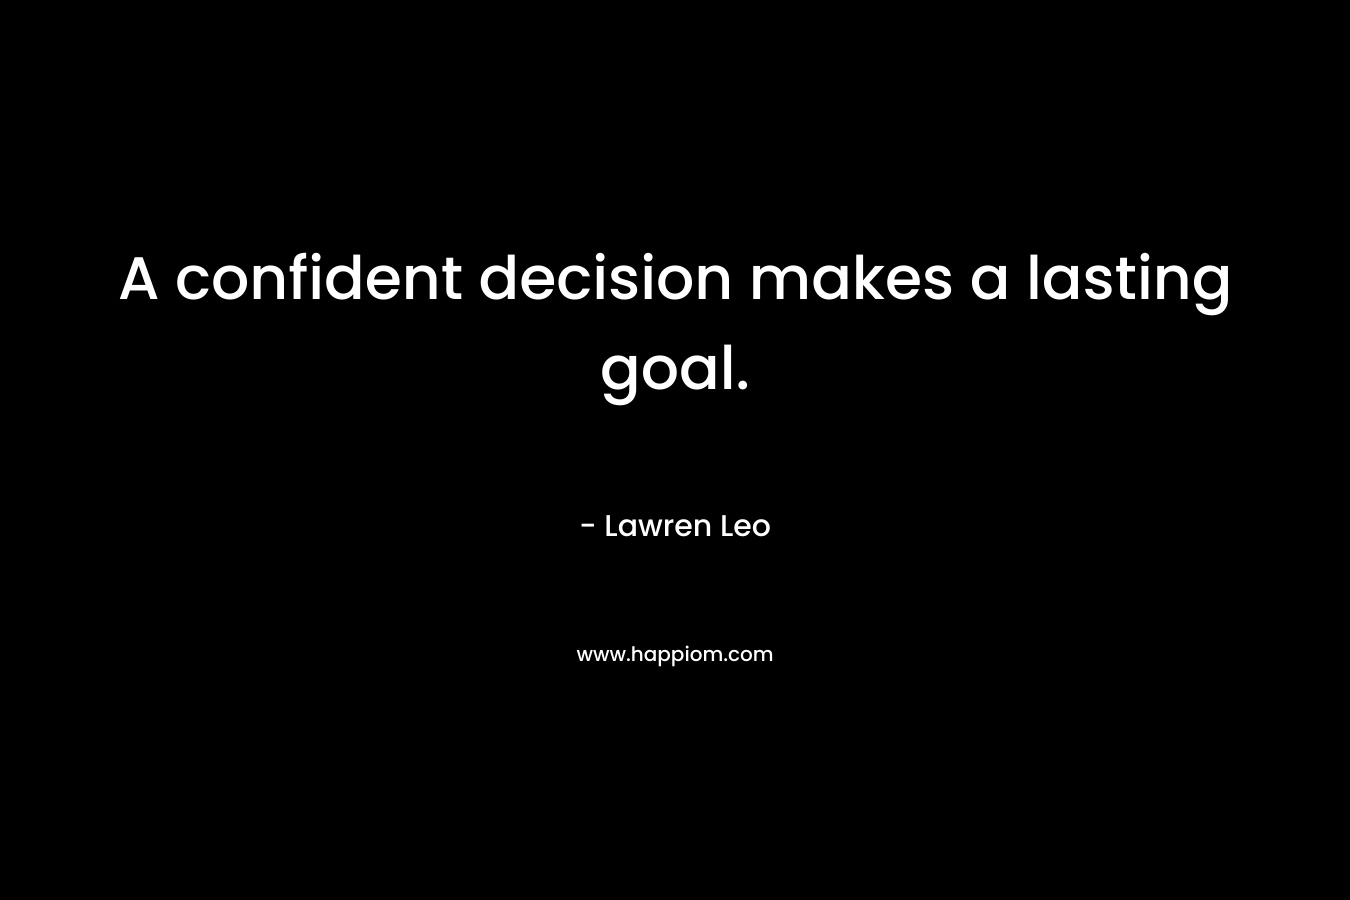 A confident decision makes a lasting goal.